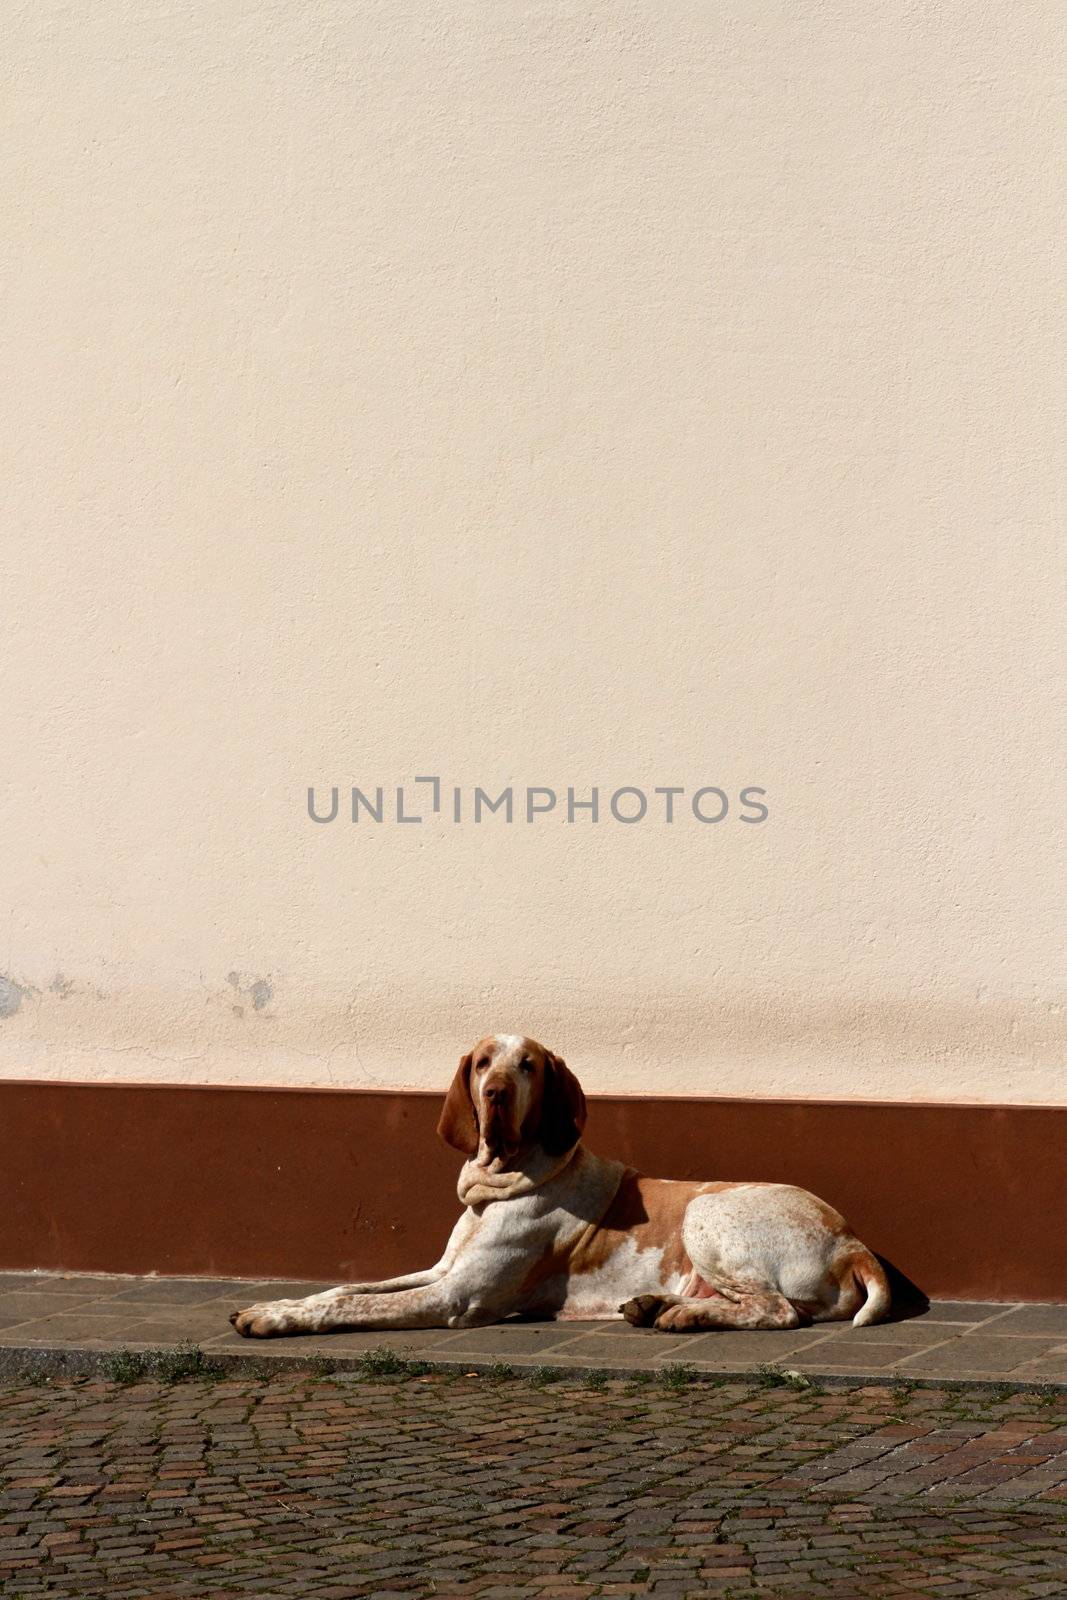 Hunting dog - italian bracco hound